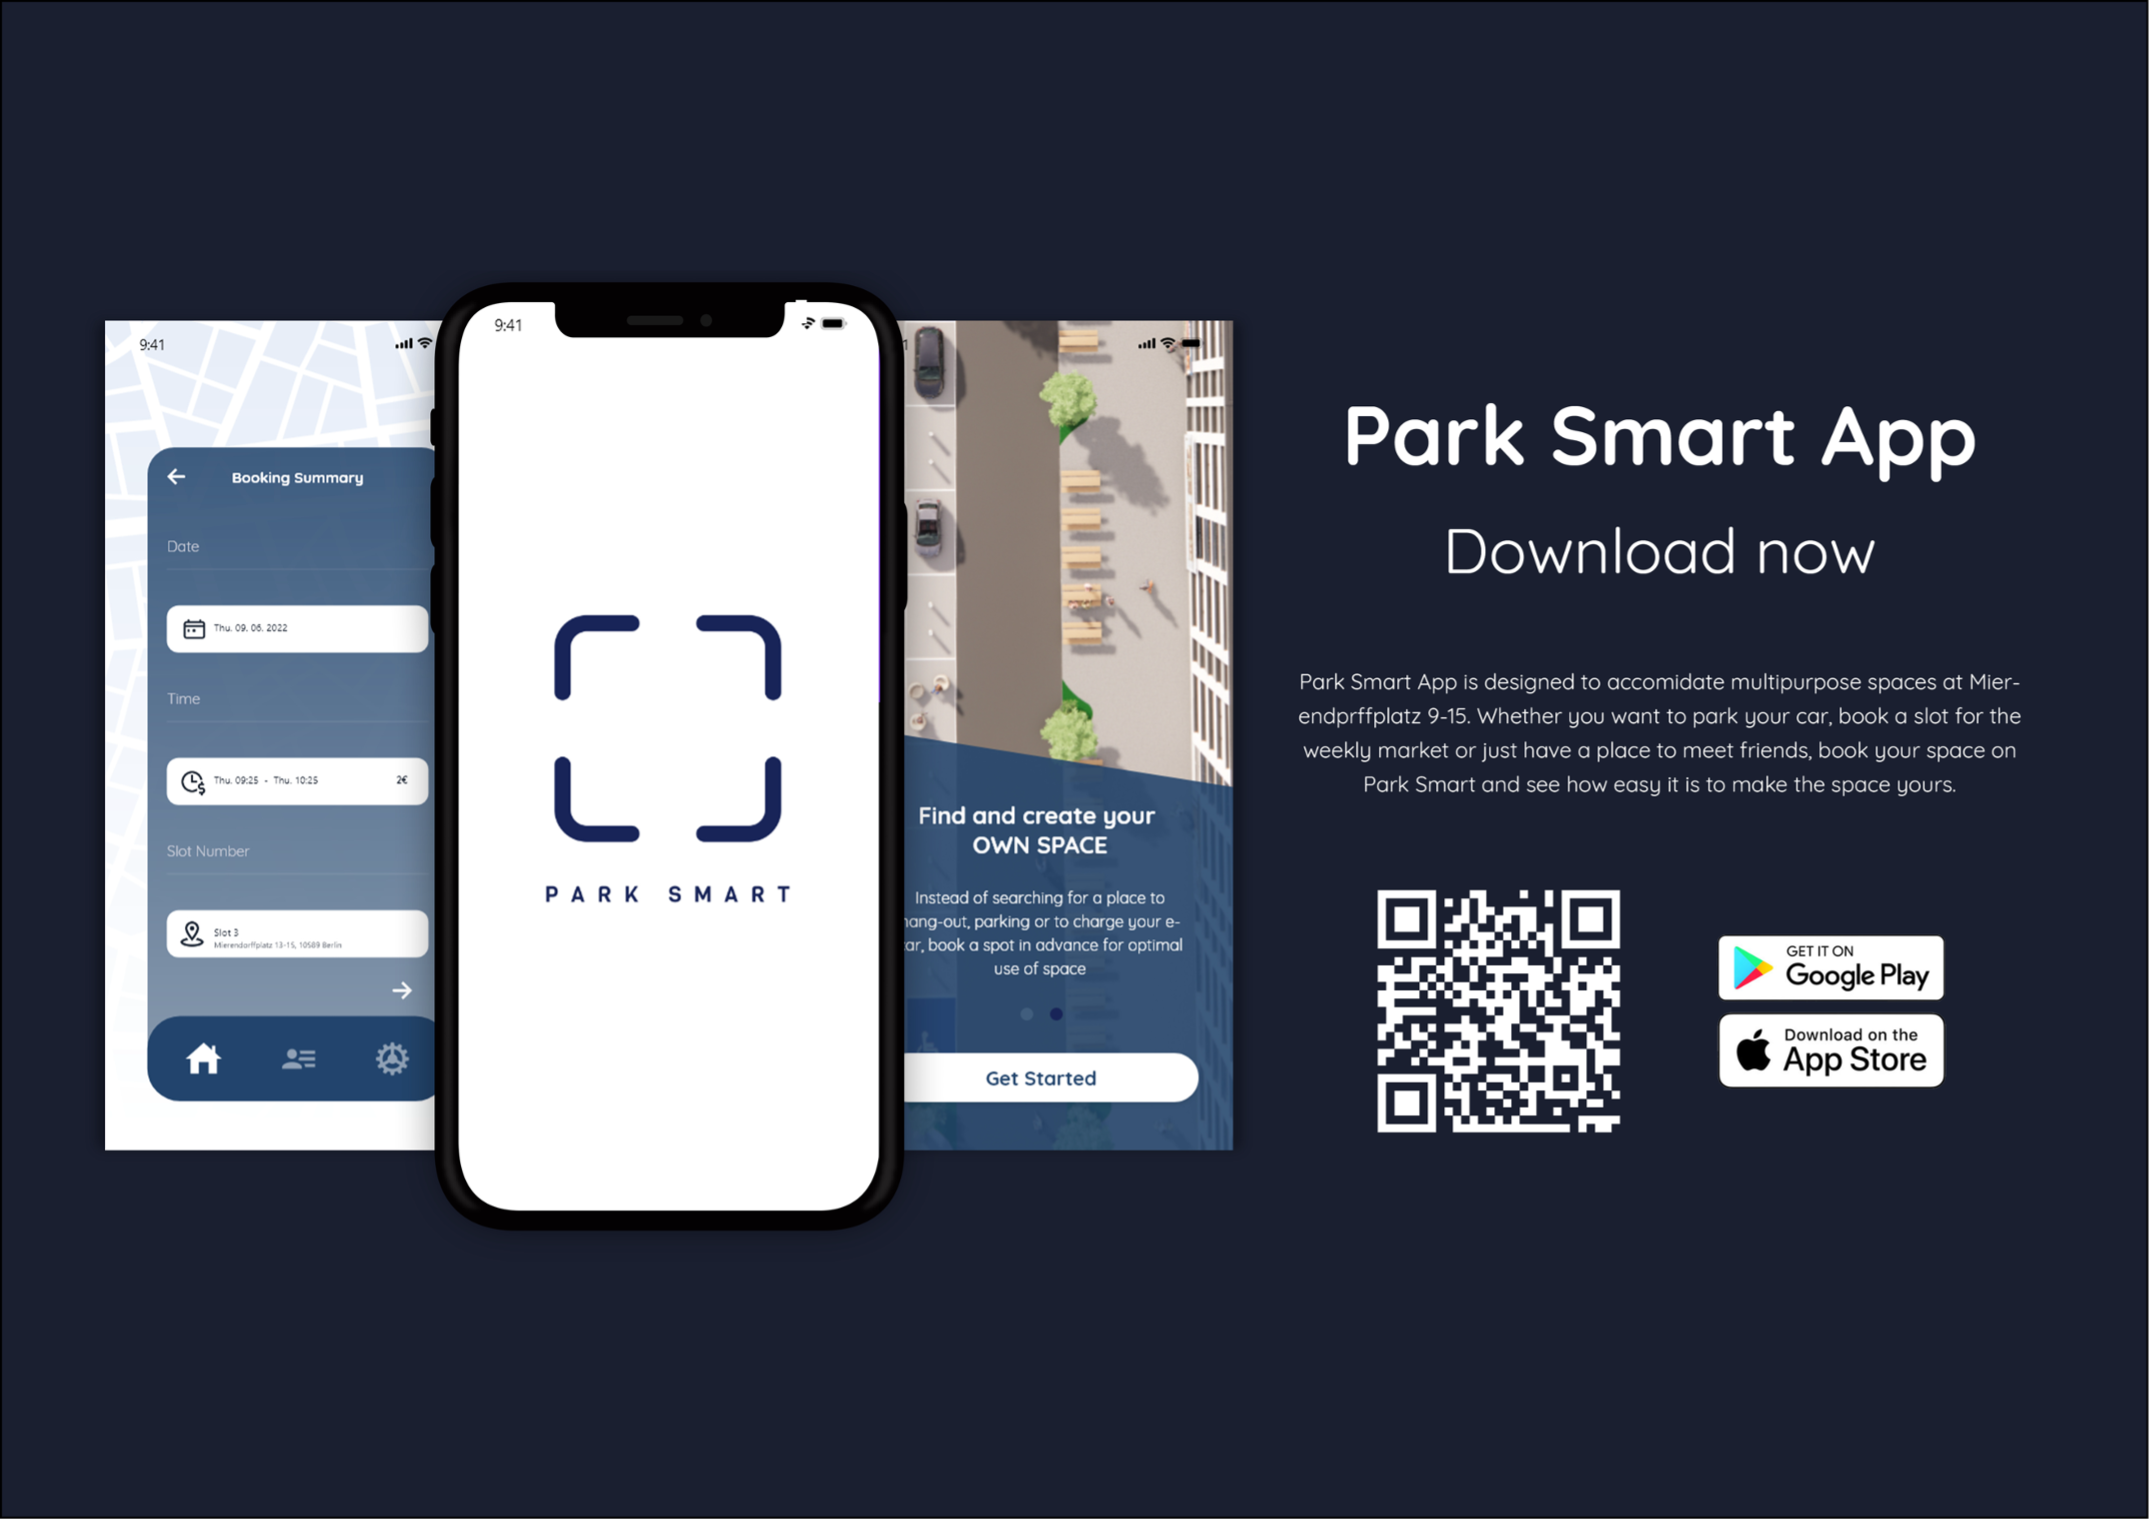 Park Smart App